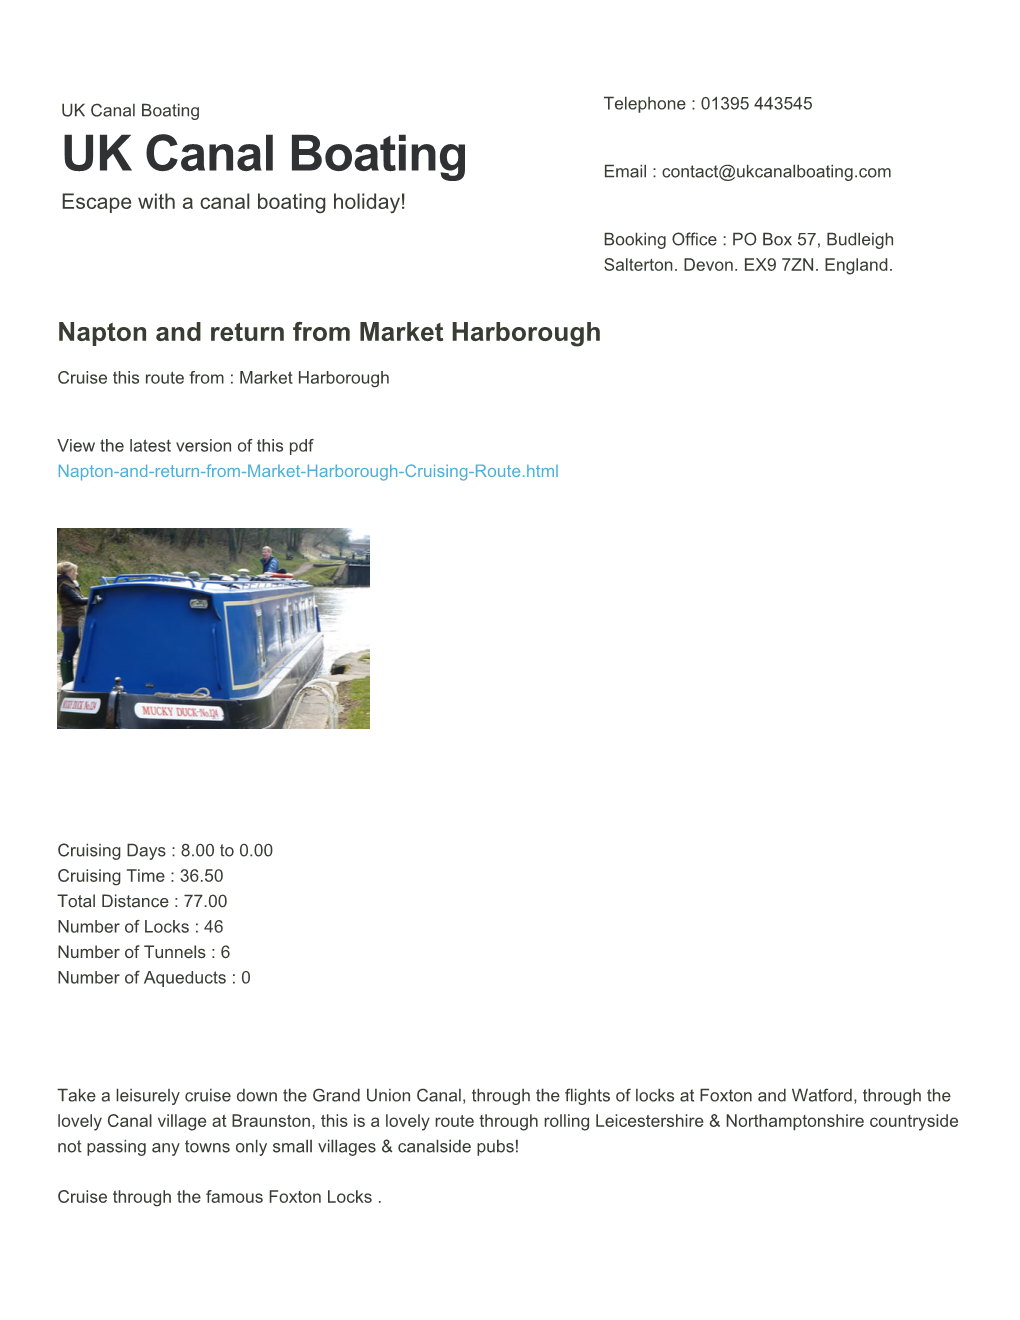 Napton and Return from Market Harborough | UK Canal Boating